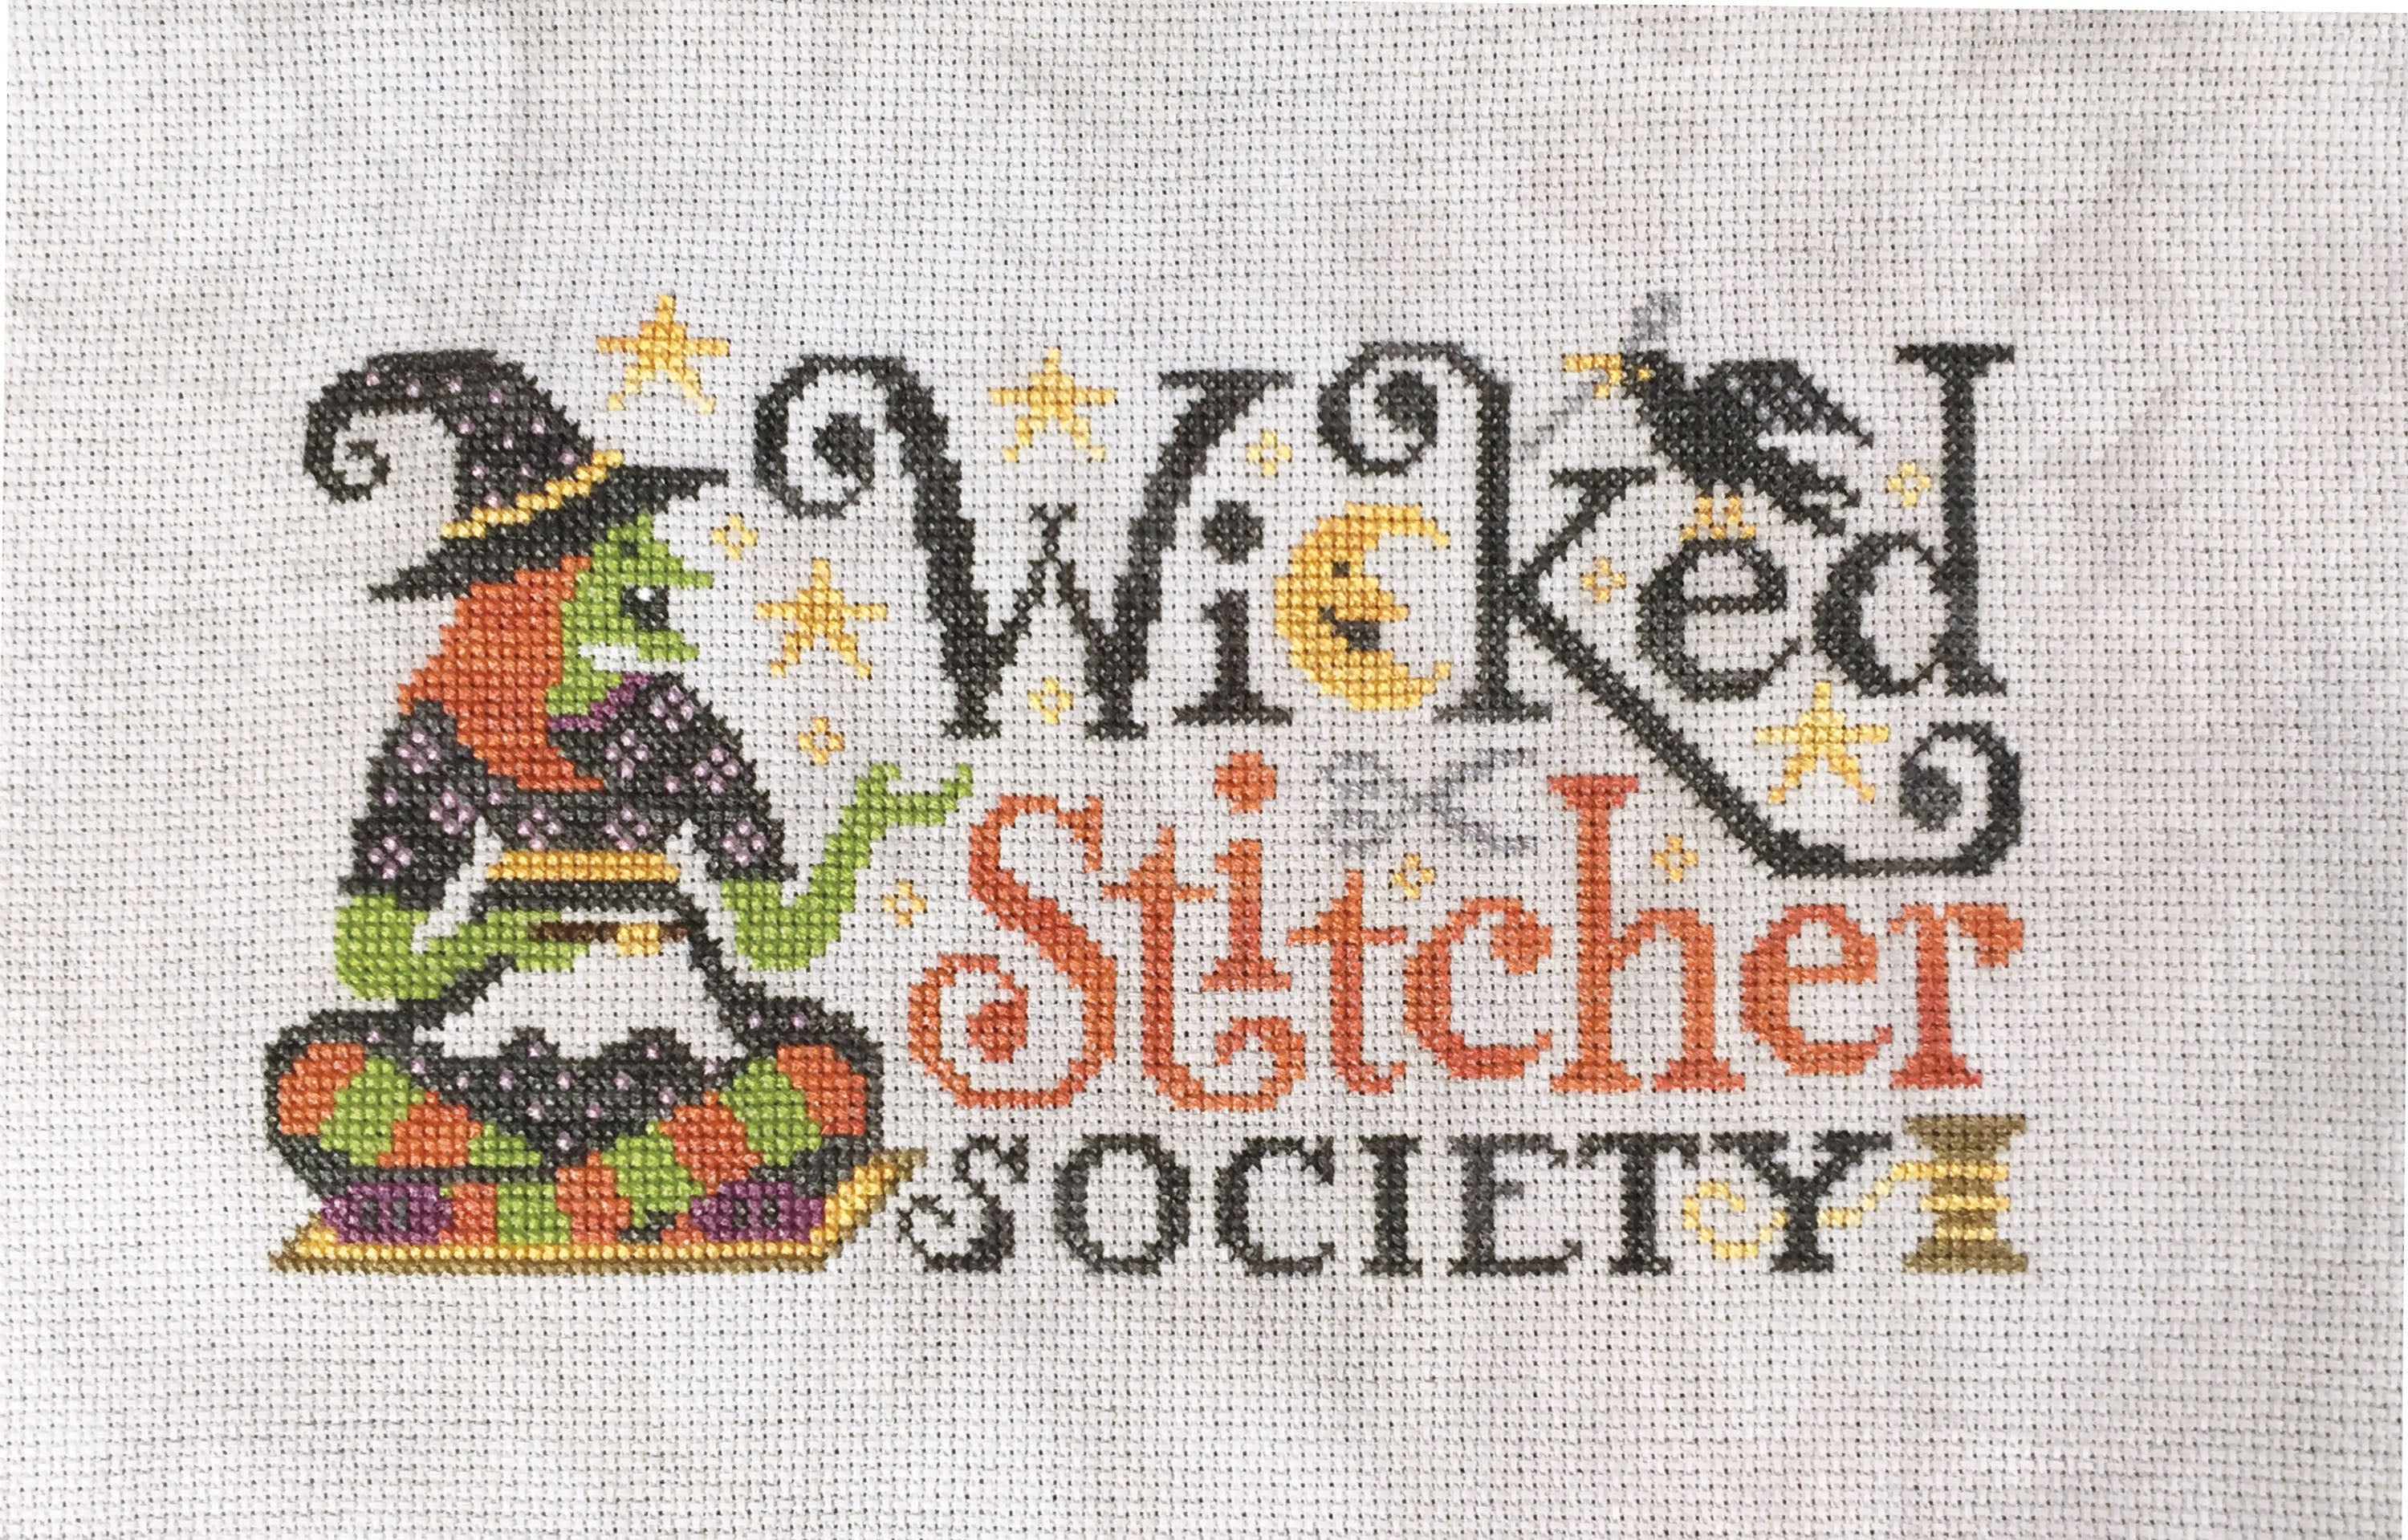 Wicked Stitcher Society  - Cross Stitch Pattern by Silver Creek Samplers